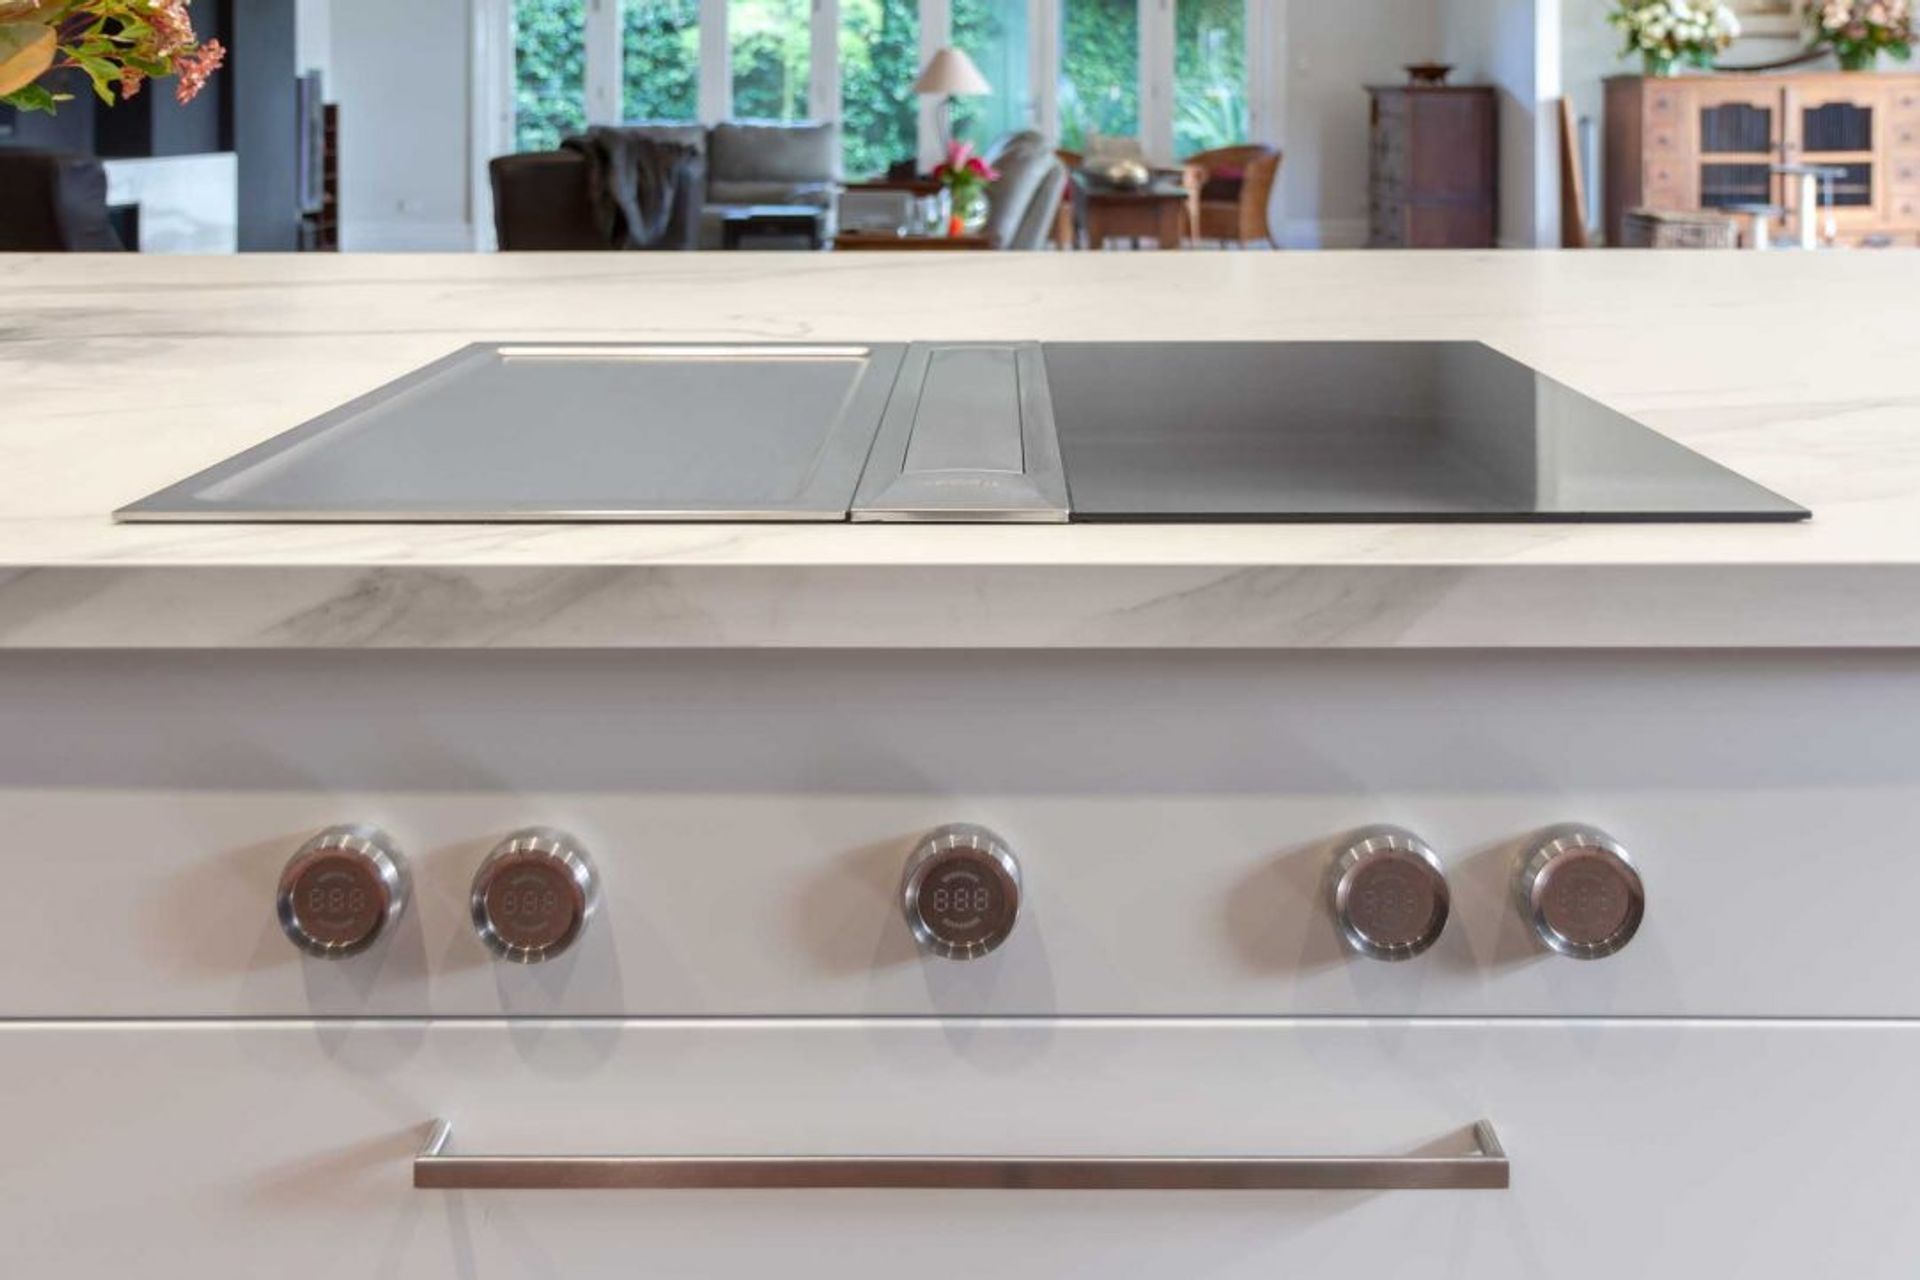 premier-kitchen-design-sydney-neolith-dekton-benchtop-splashback-bora-cooktop-1-1084x723.jpg